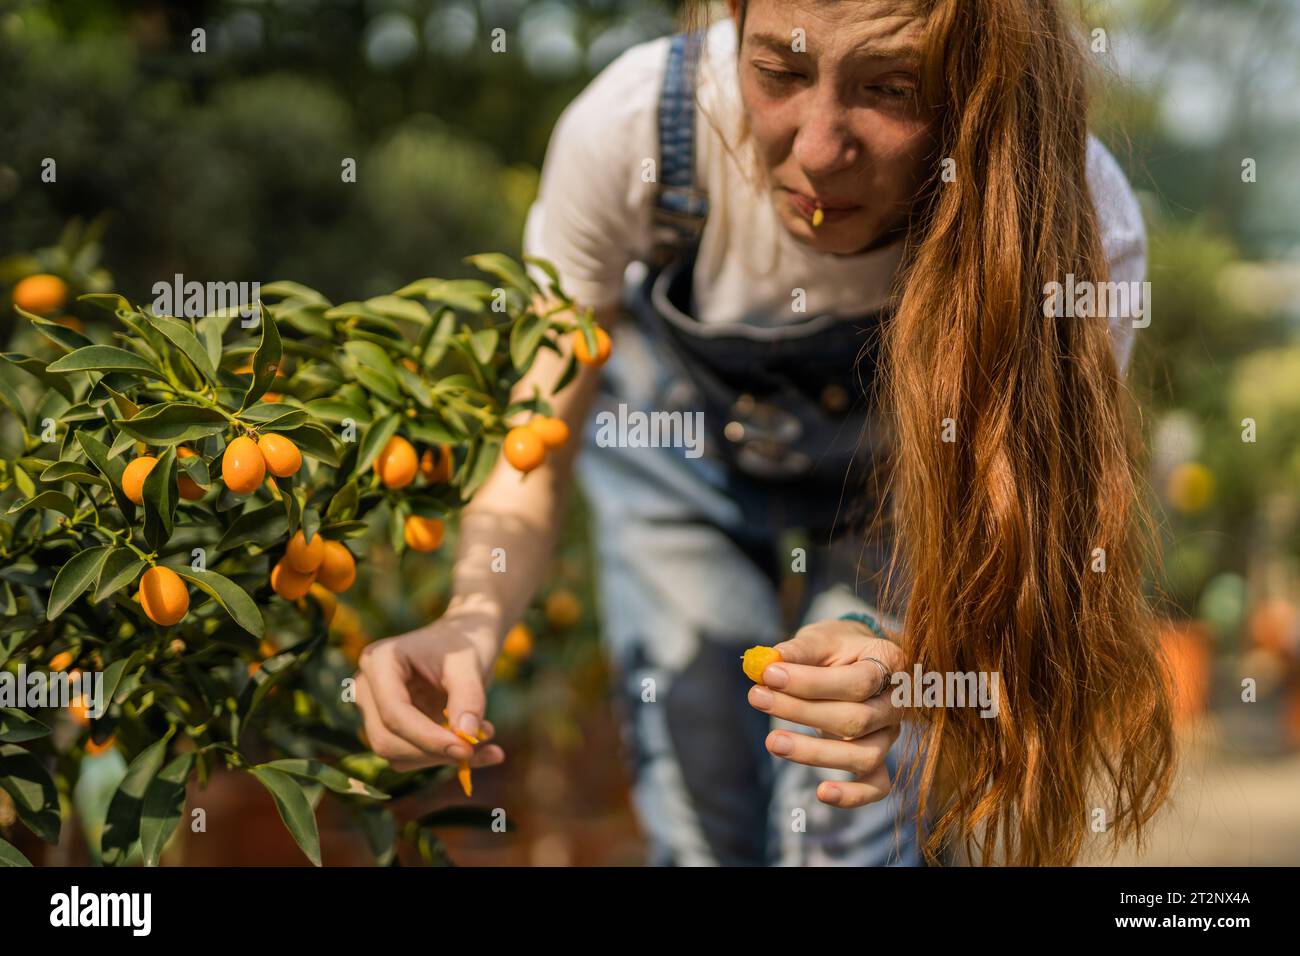 Chica de jengibre reaccionando después de que ella probó la mandarina inmadura que ella recogió del árbol Foto de stock